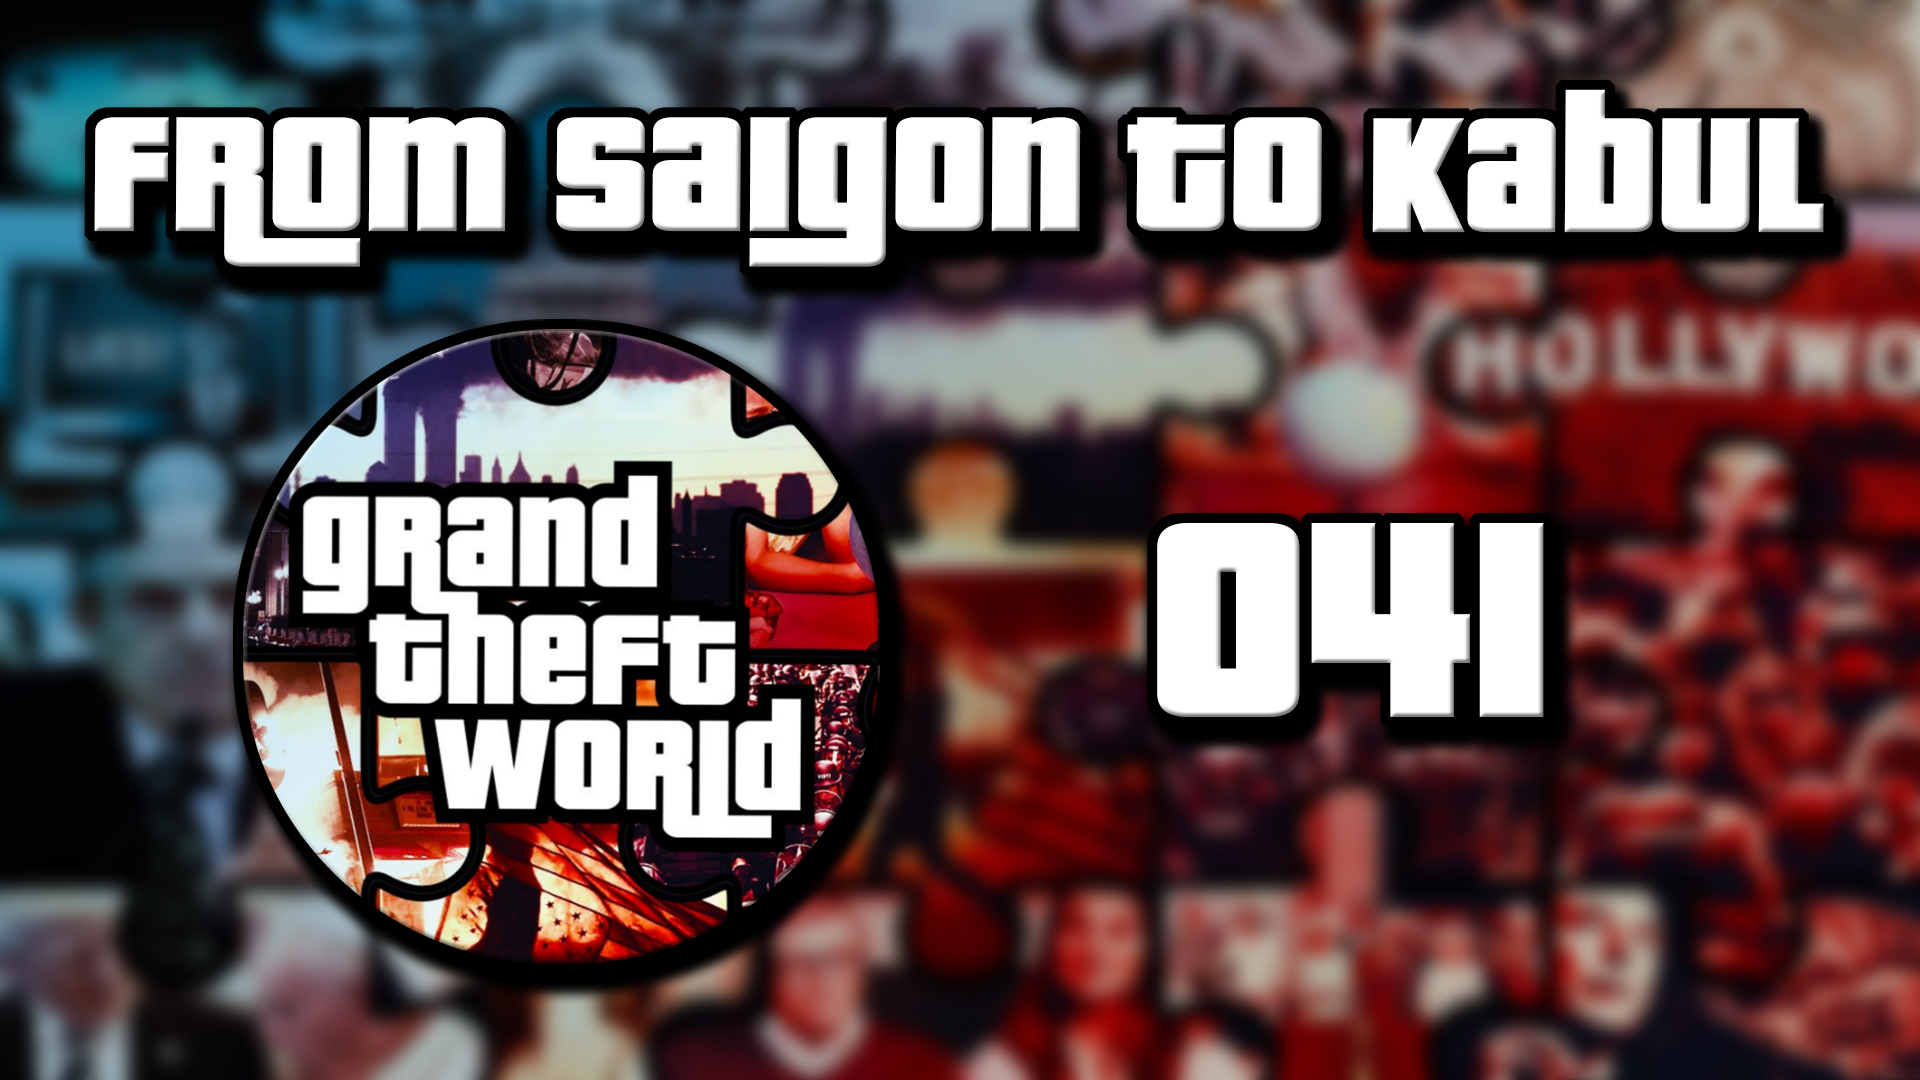 Grand Theft World Podcast 041 | From Saigon to Kabul